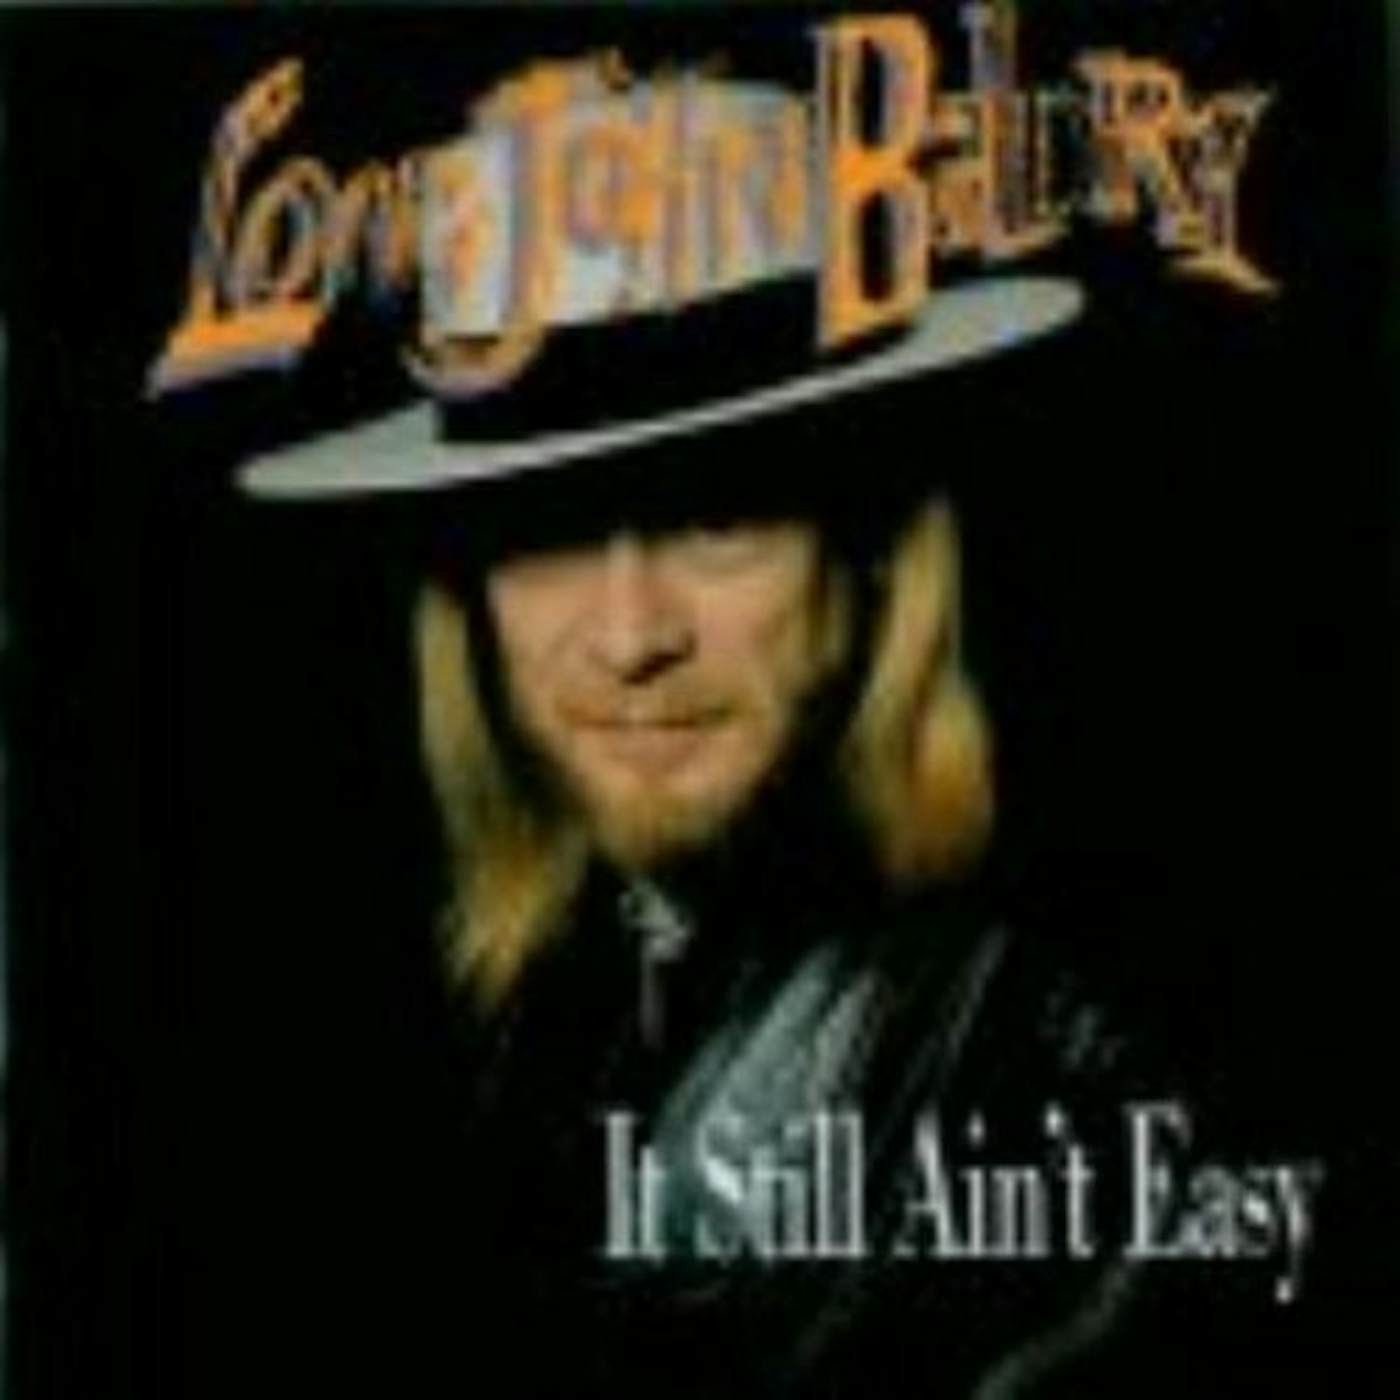 Long John Baldry IT STILL AIN'T EASY CD